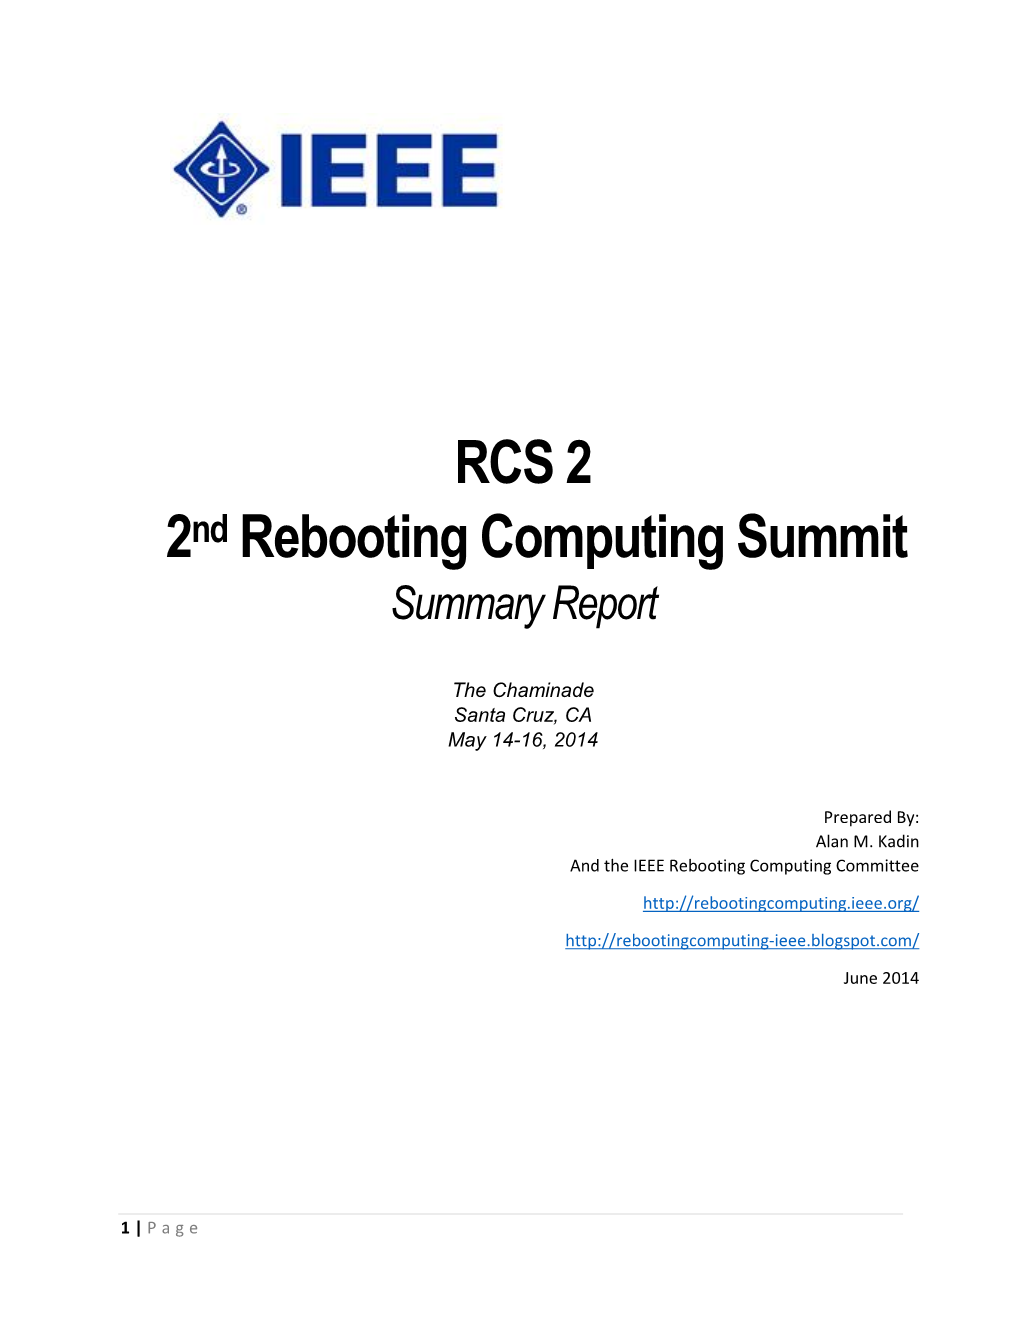 RCS 2 2Nd Rebooting Computing Summit Summary Report